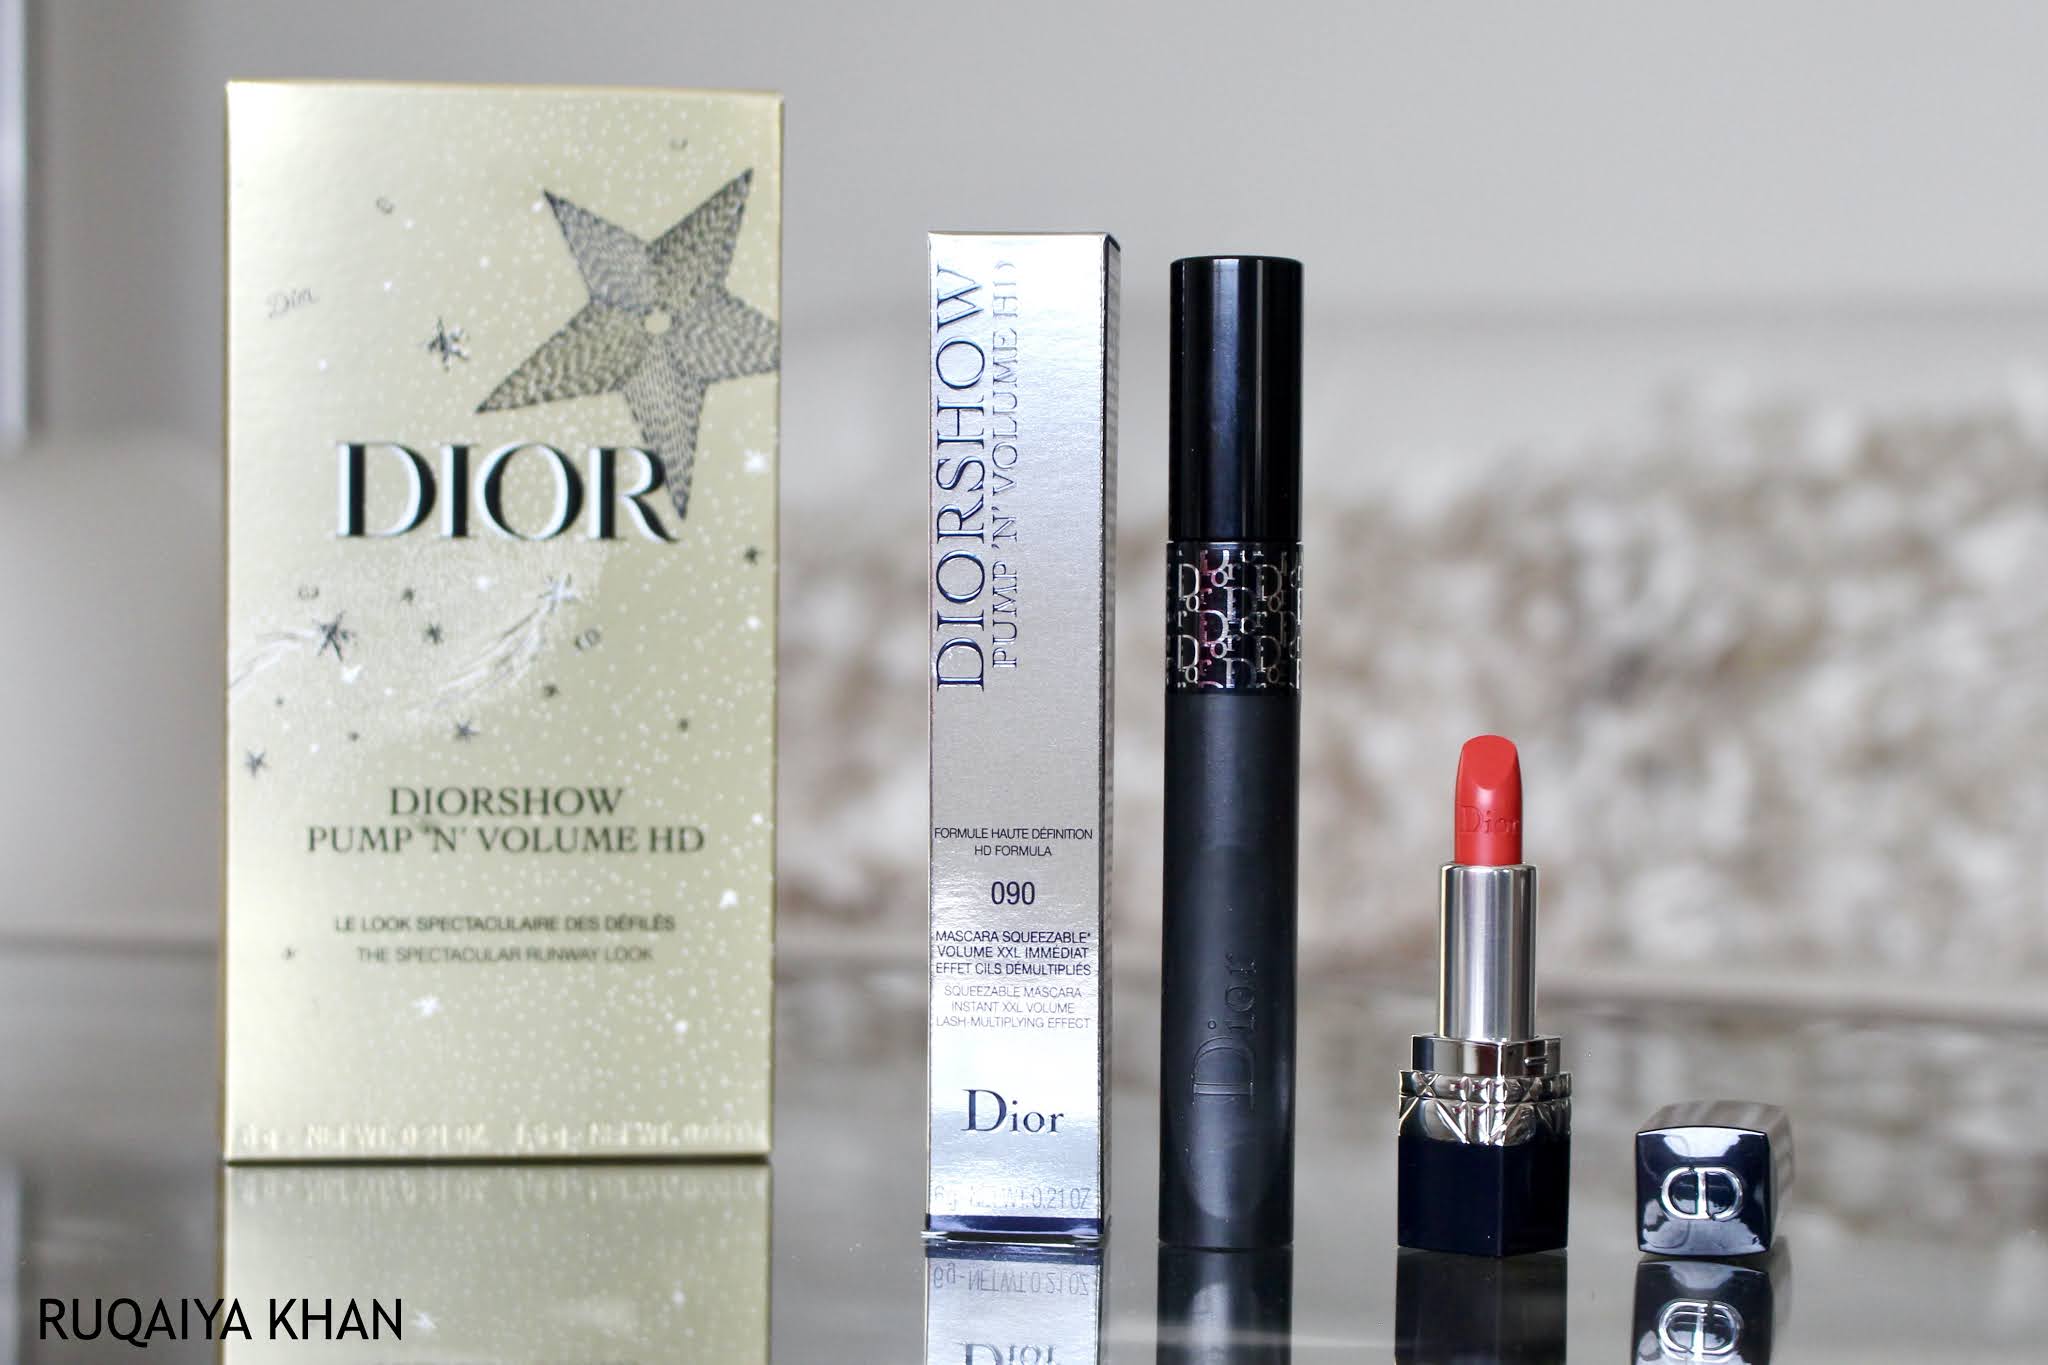 eksplicit Også form Ruqaiya Khan: Dior Pump 'N' Volume Mascara & Lipstick Set Review and  Swatches